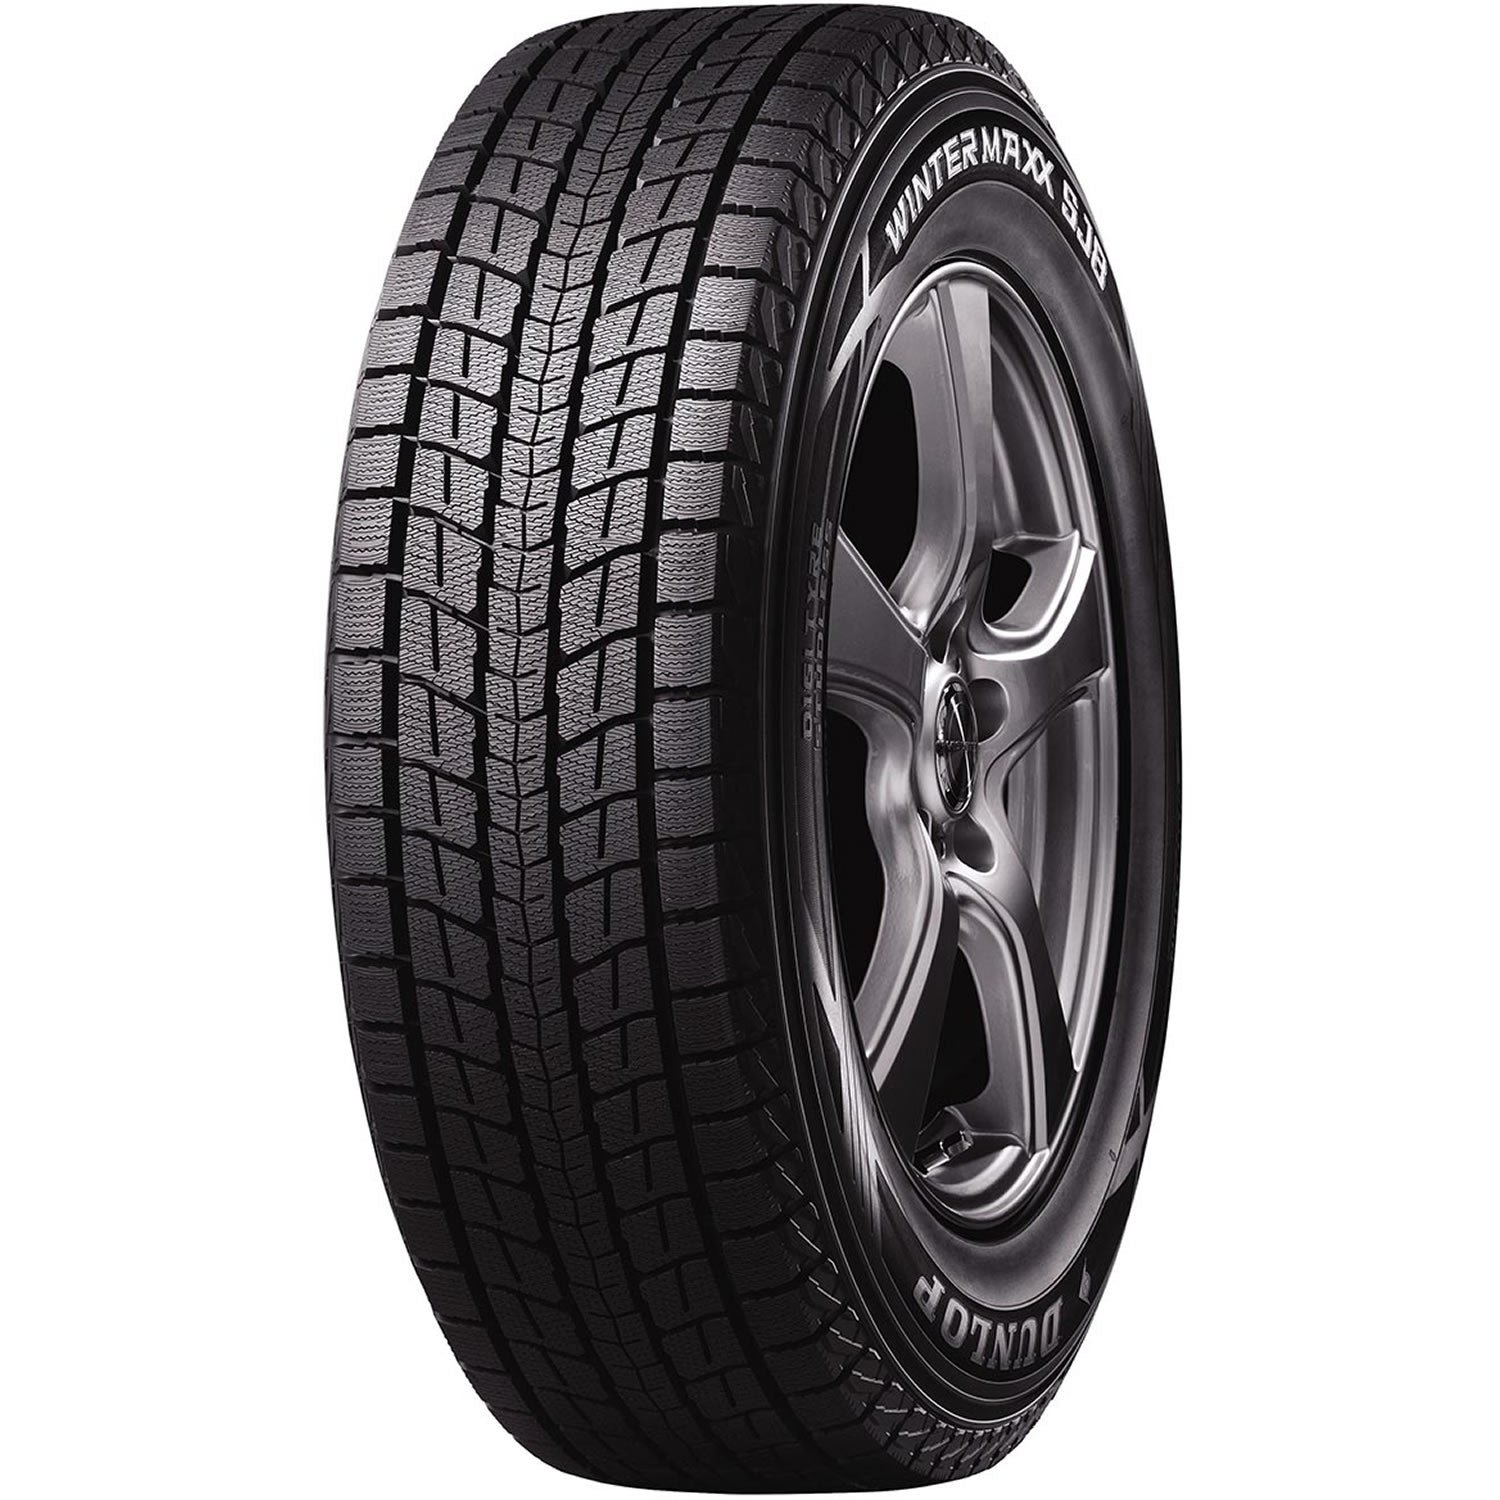 DUNLOP WINTER MAXX SJ8 215/70R16 (27.9X8.5R 16) Tires